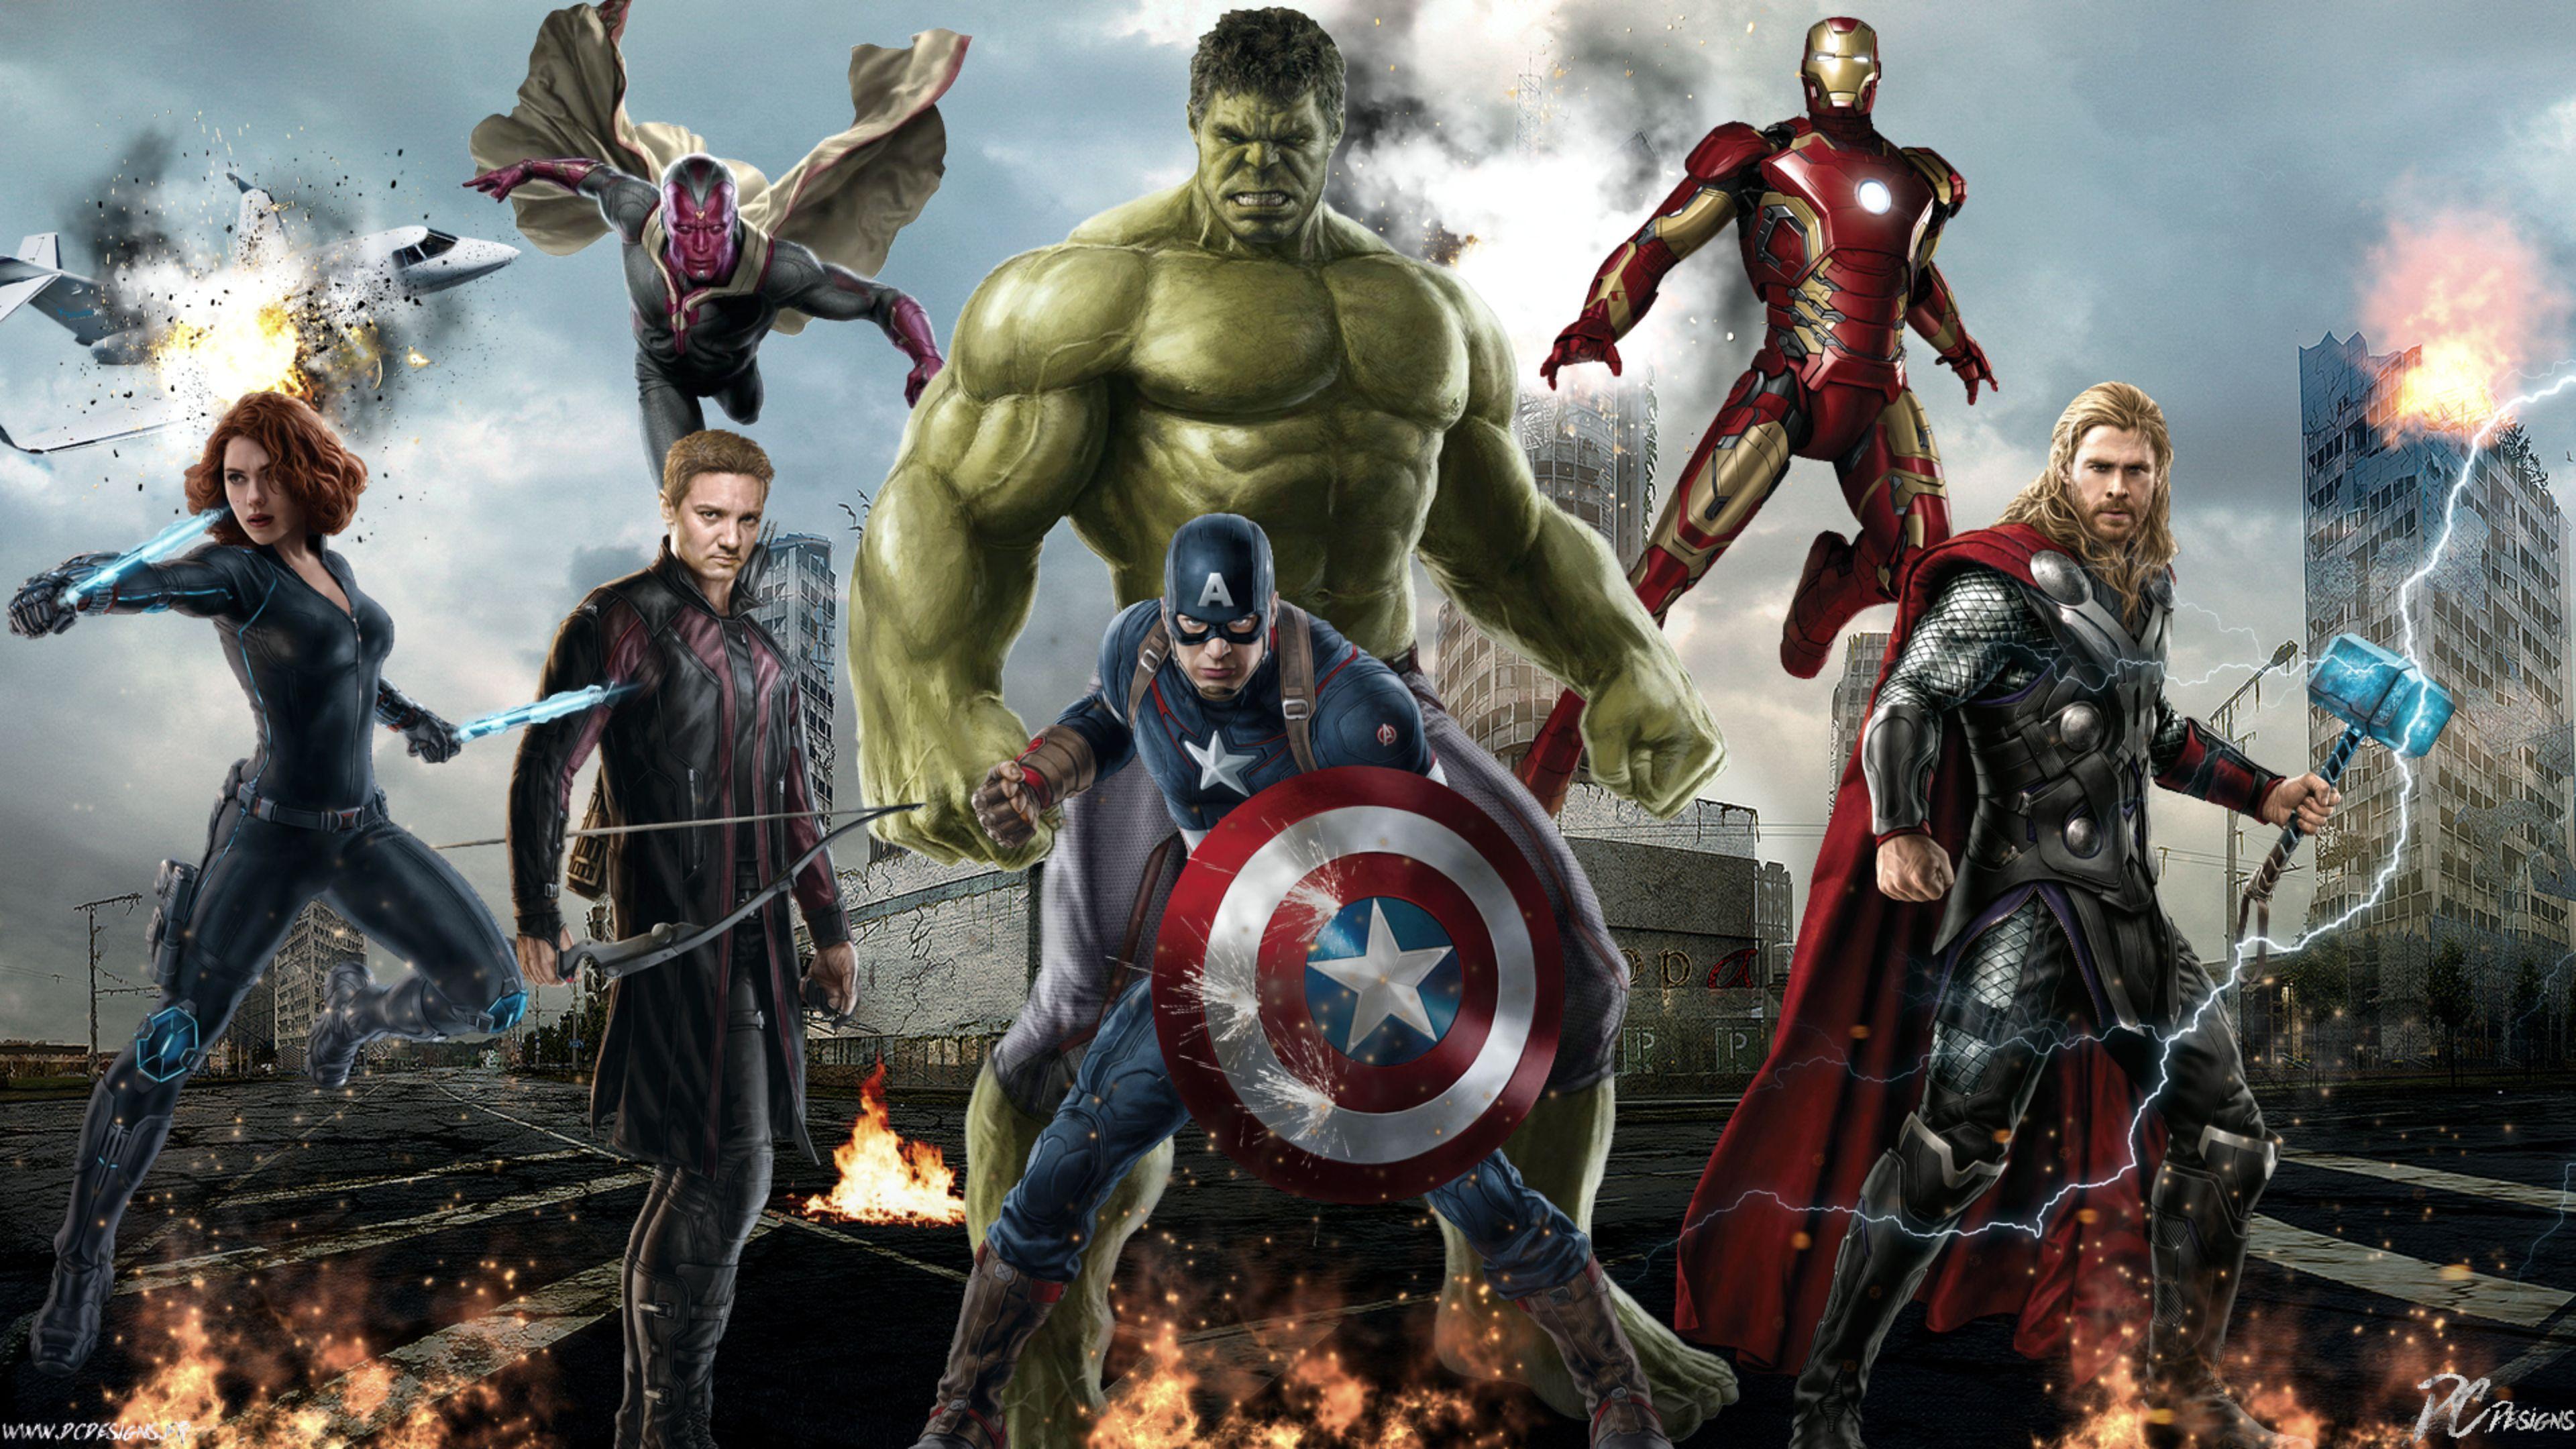 Avengers Age of Ultron 4K Wallpaper. Free 4K